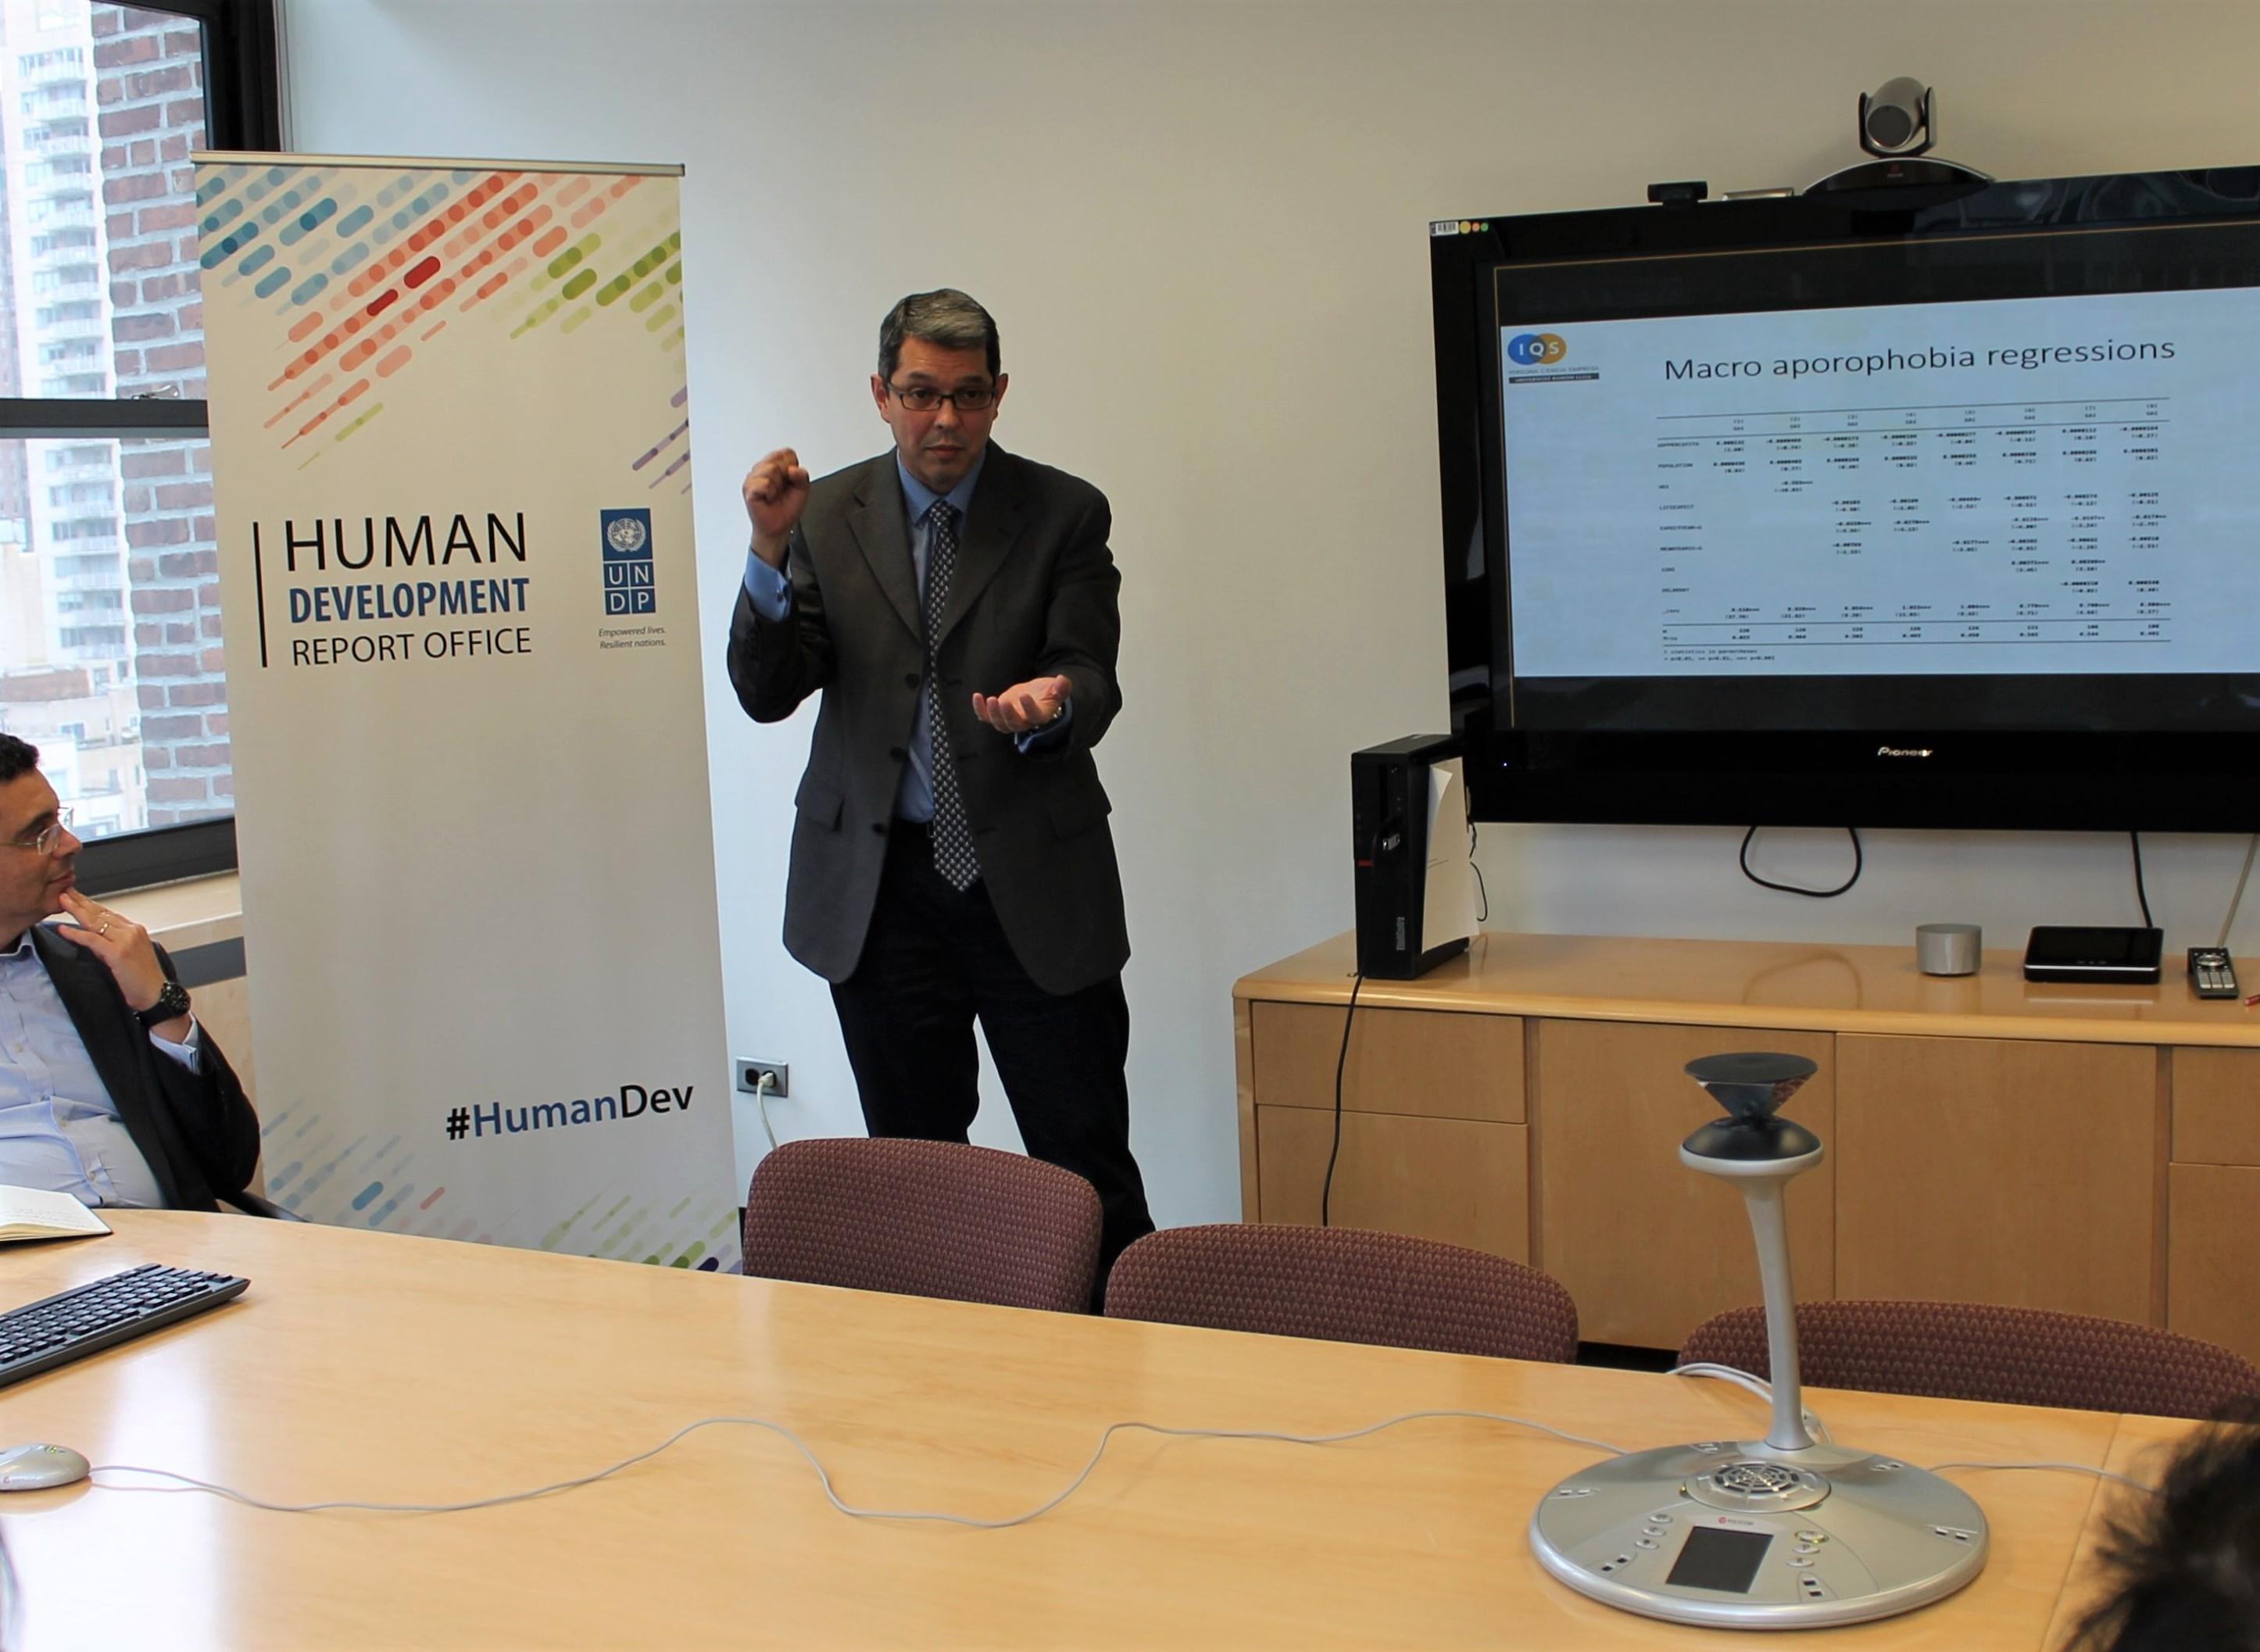 Flavio Comim speaks on 'Aporophobia' at Human Development Report Seminar in New York